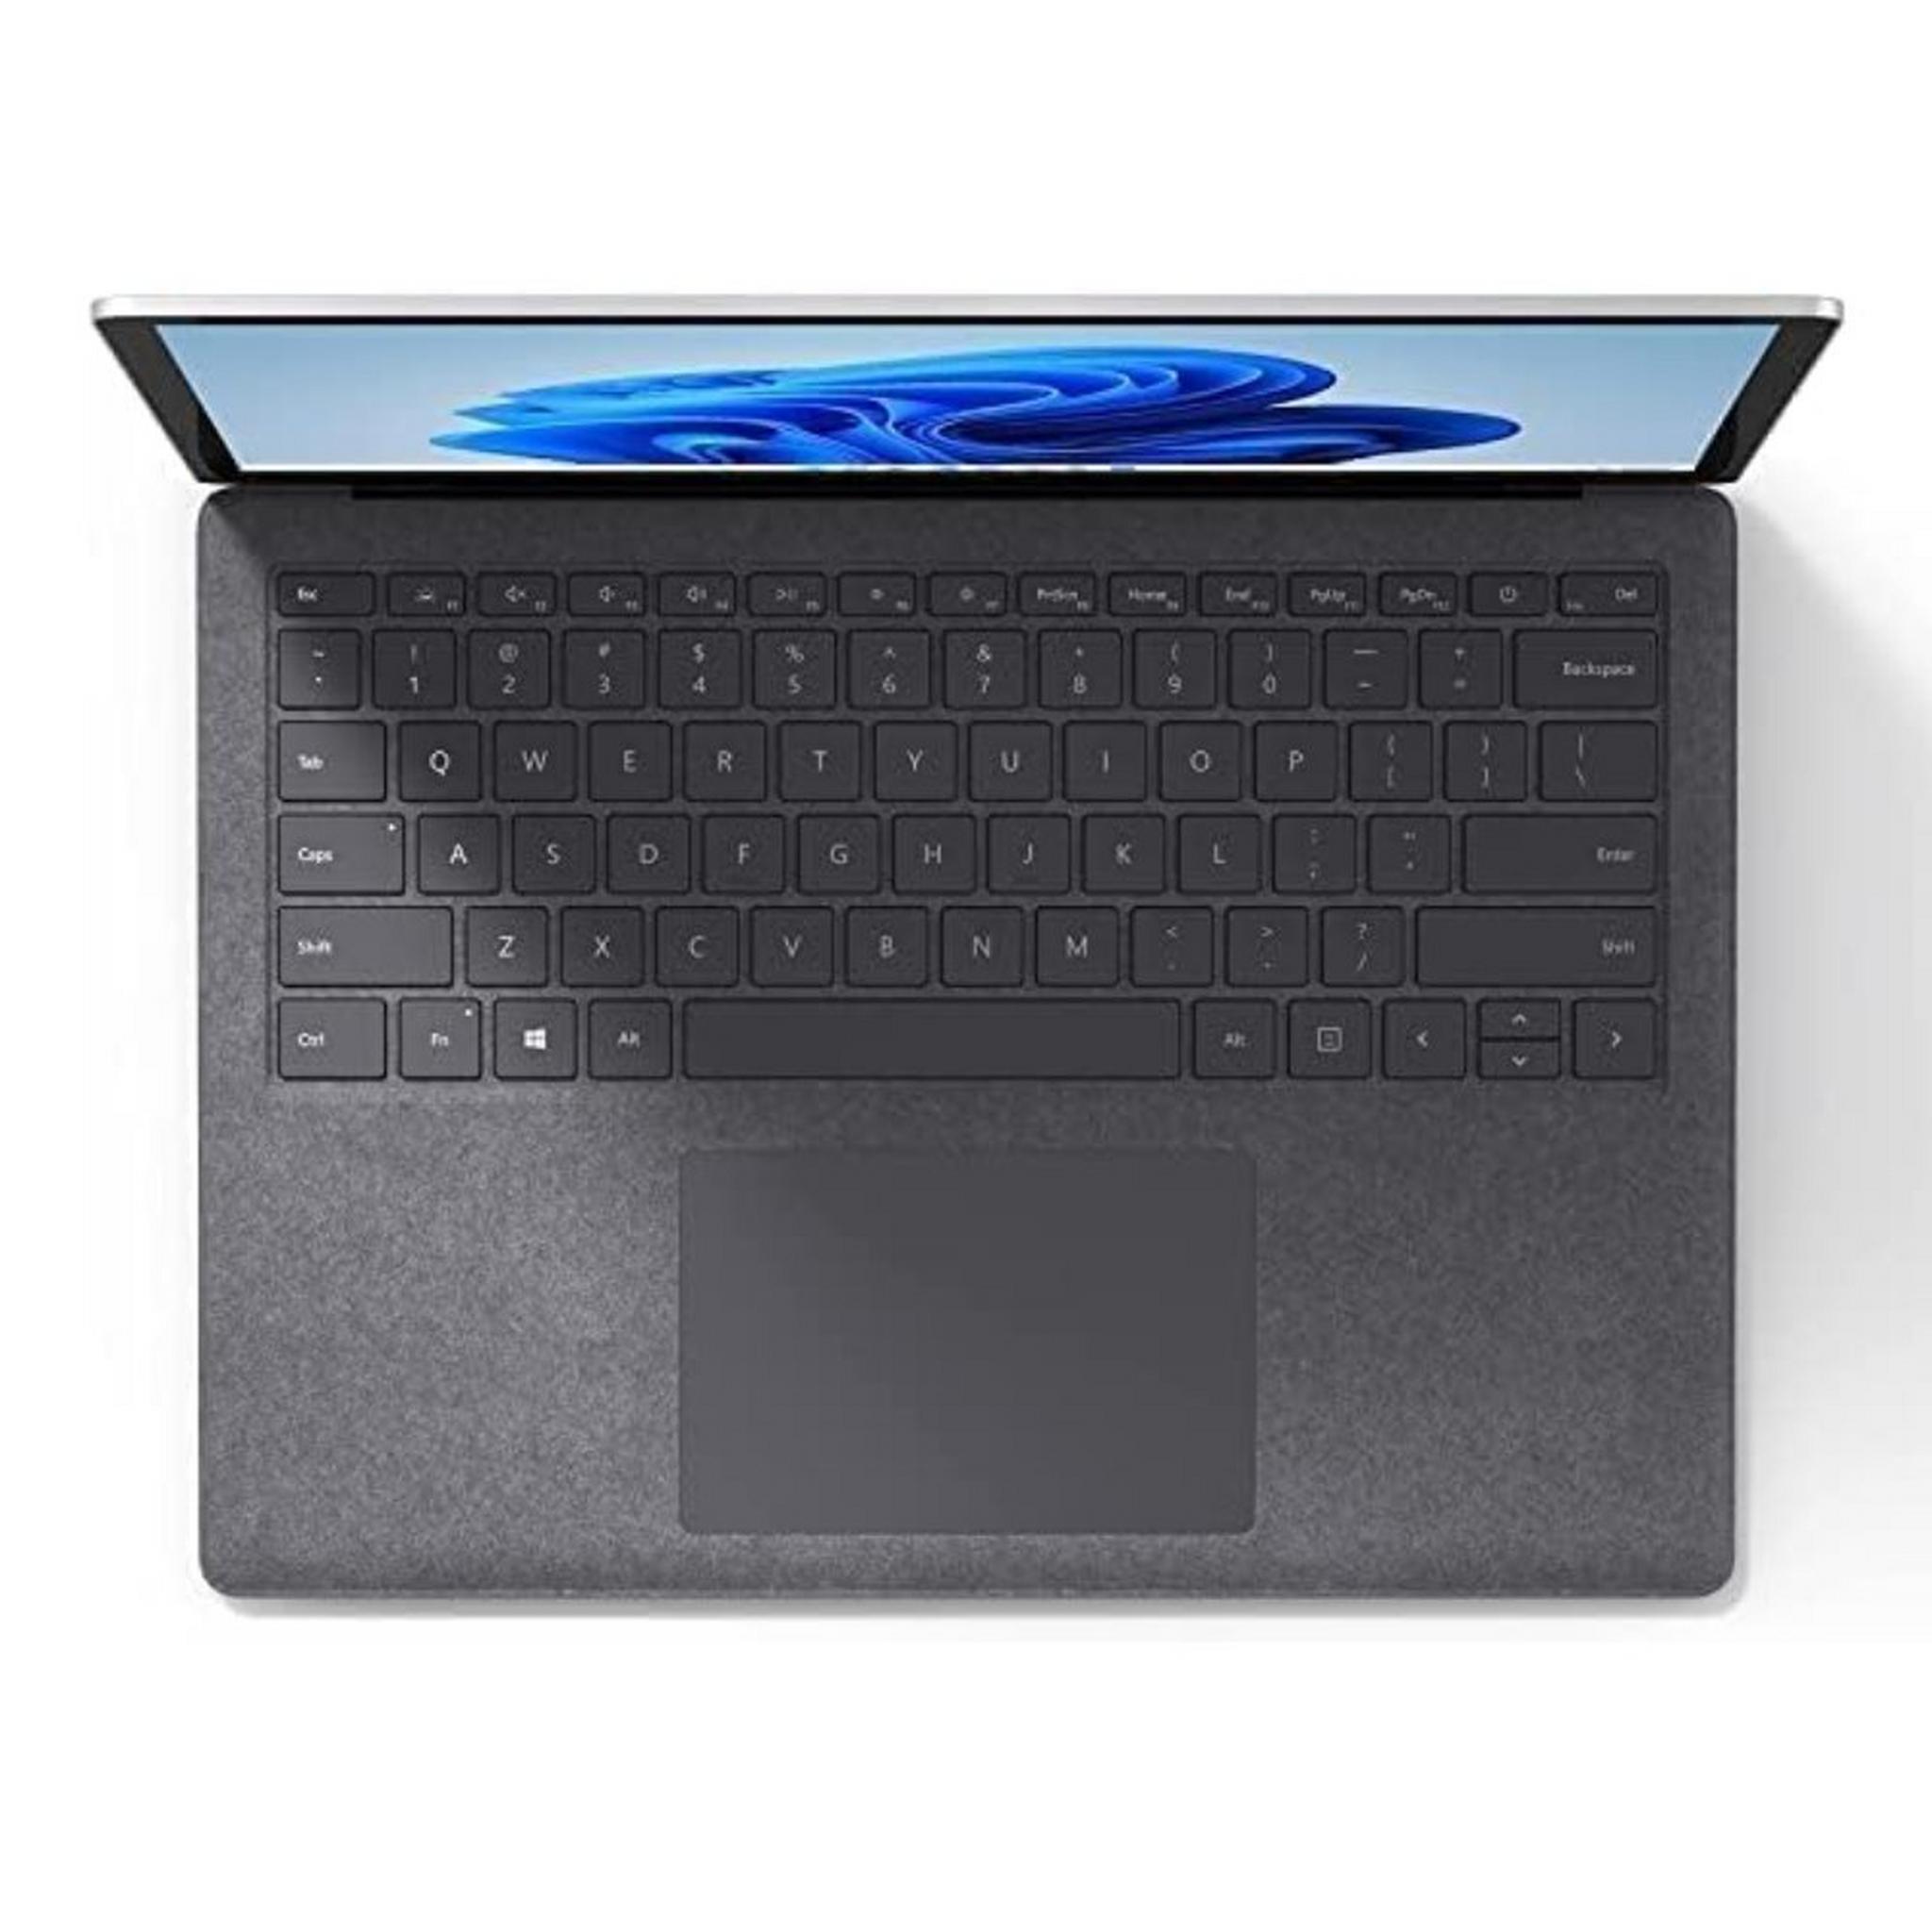 Microsoft Surface Laptop 4, Intel Core i7 11th Gen, 16GB RAM, 512GB SSD, 13.5-inch Touch Screen, Intel graphics Iris Xe, Windows 10, 5EB-00048 - Platinum